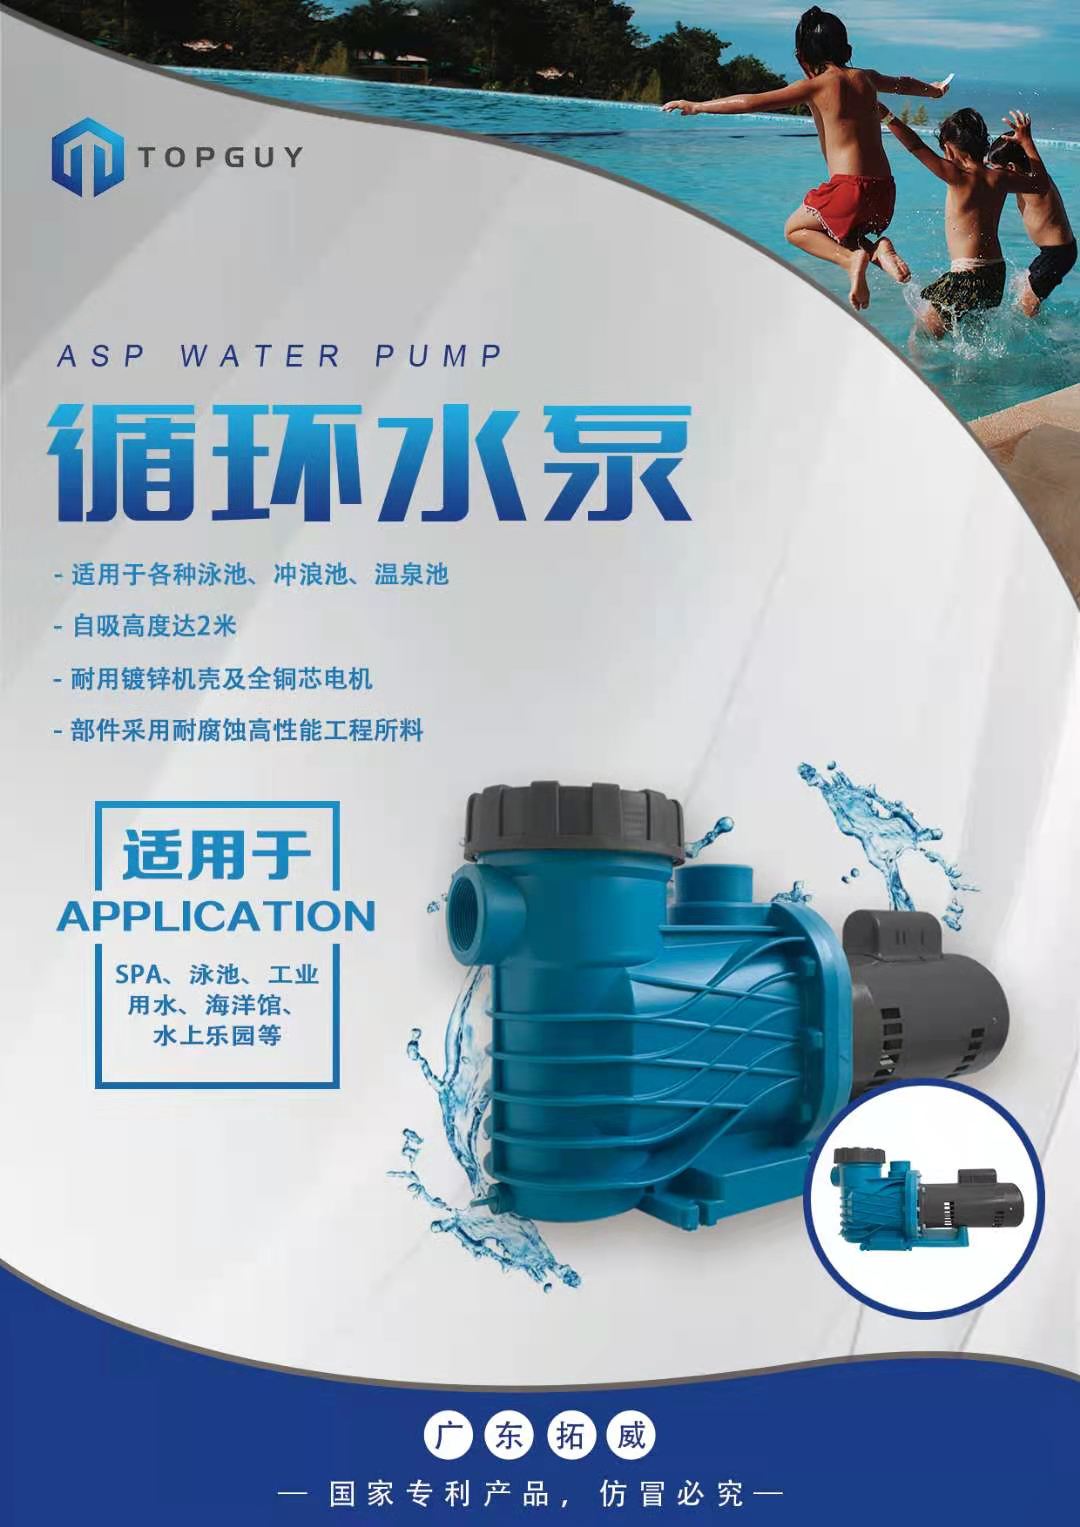 ASP series pumps